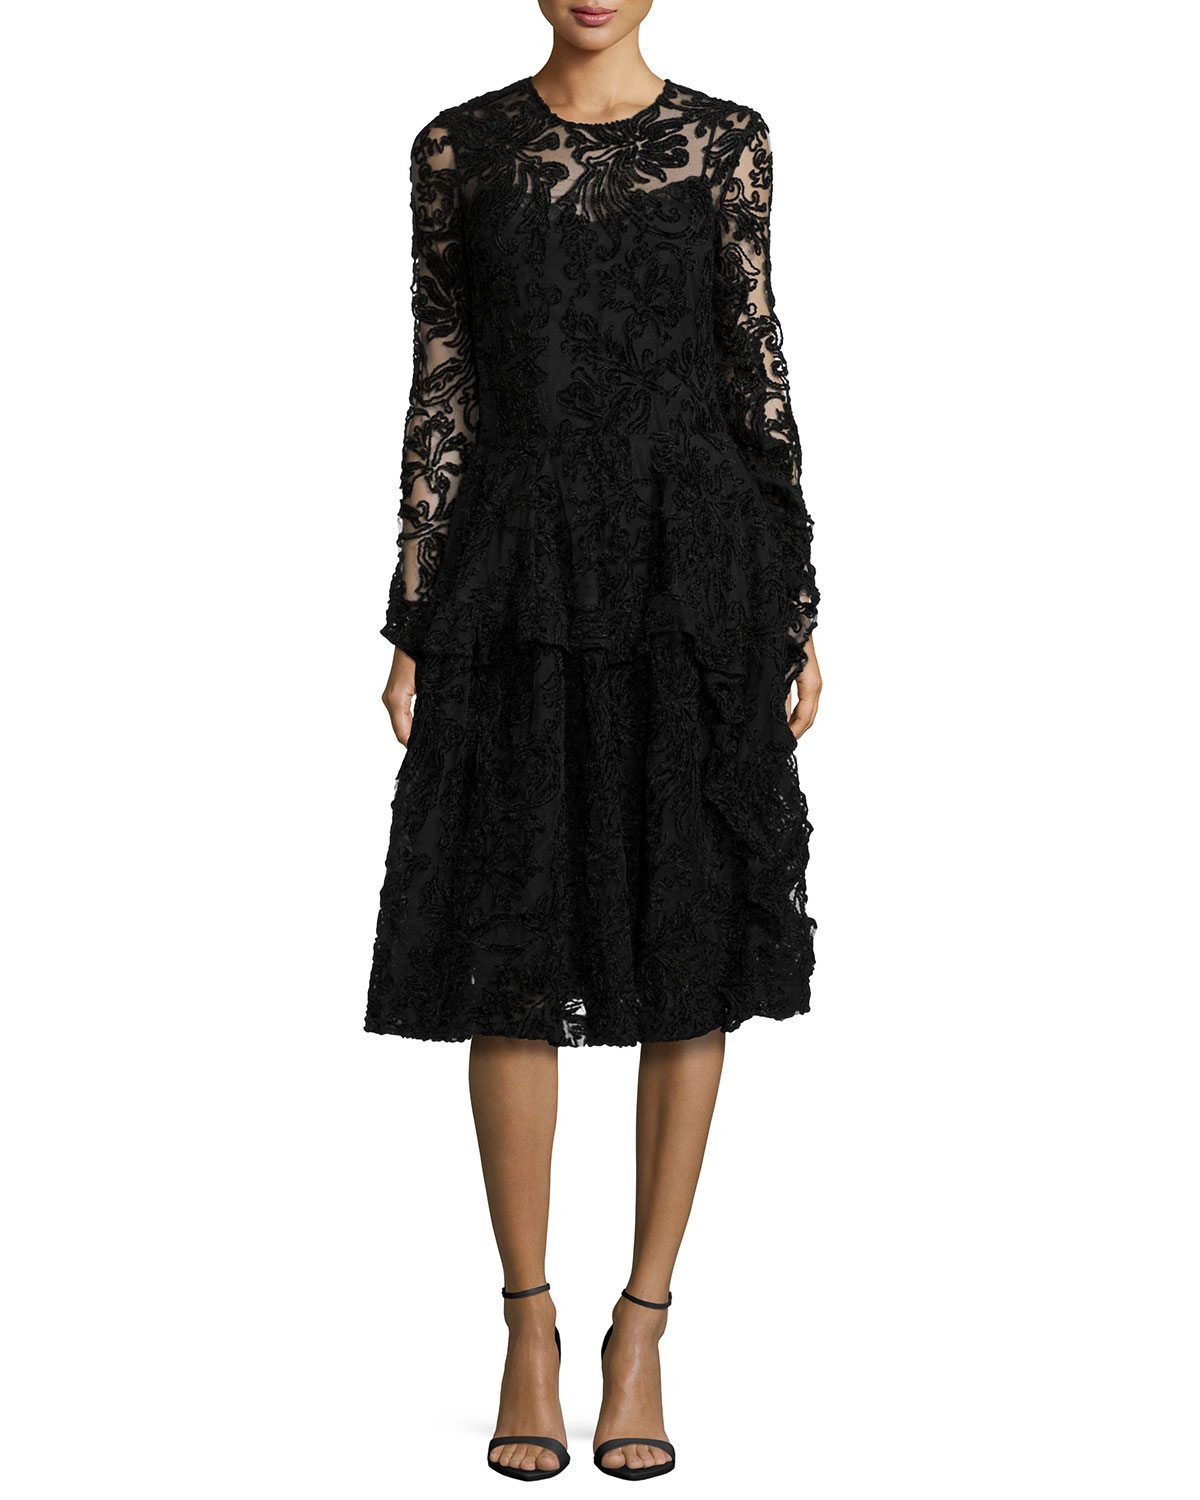 Simone rocha Chenille Lace Tiered Ruffle Dress in Black | Lyst